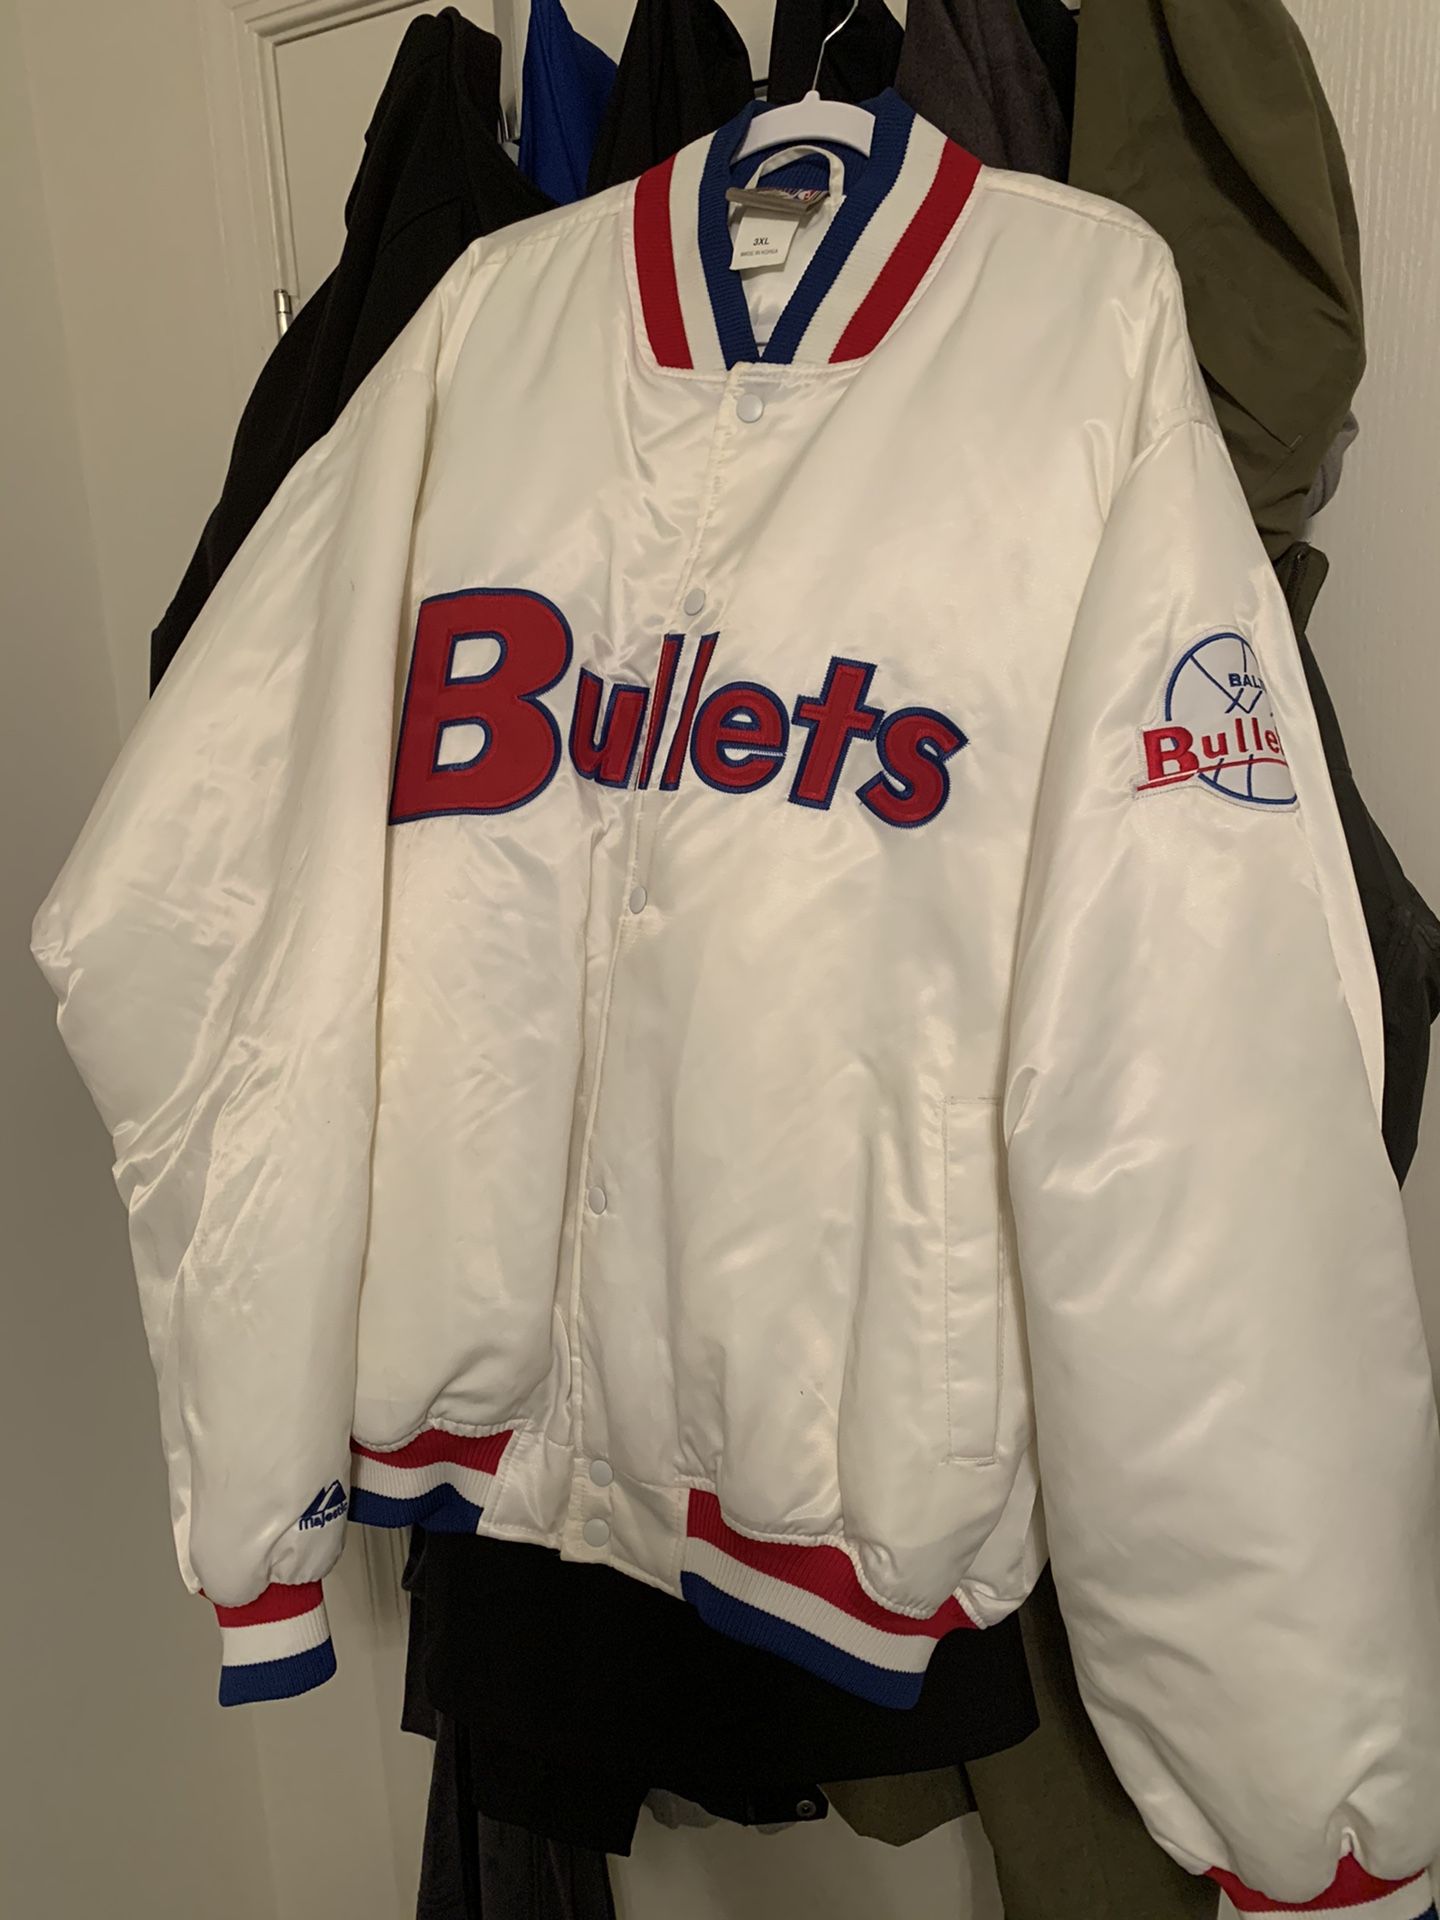 NBA Bullets 90’s Vintage Jacket $40